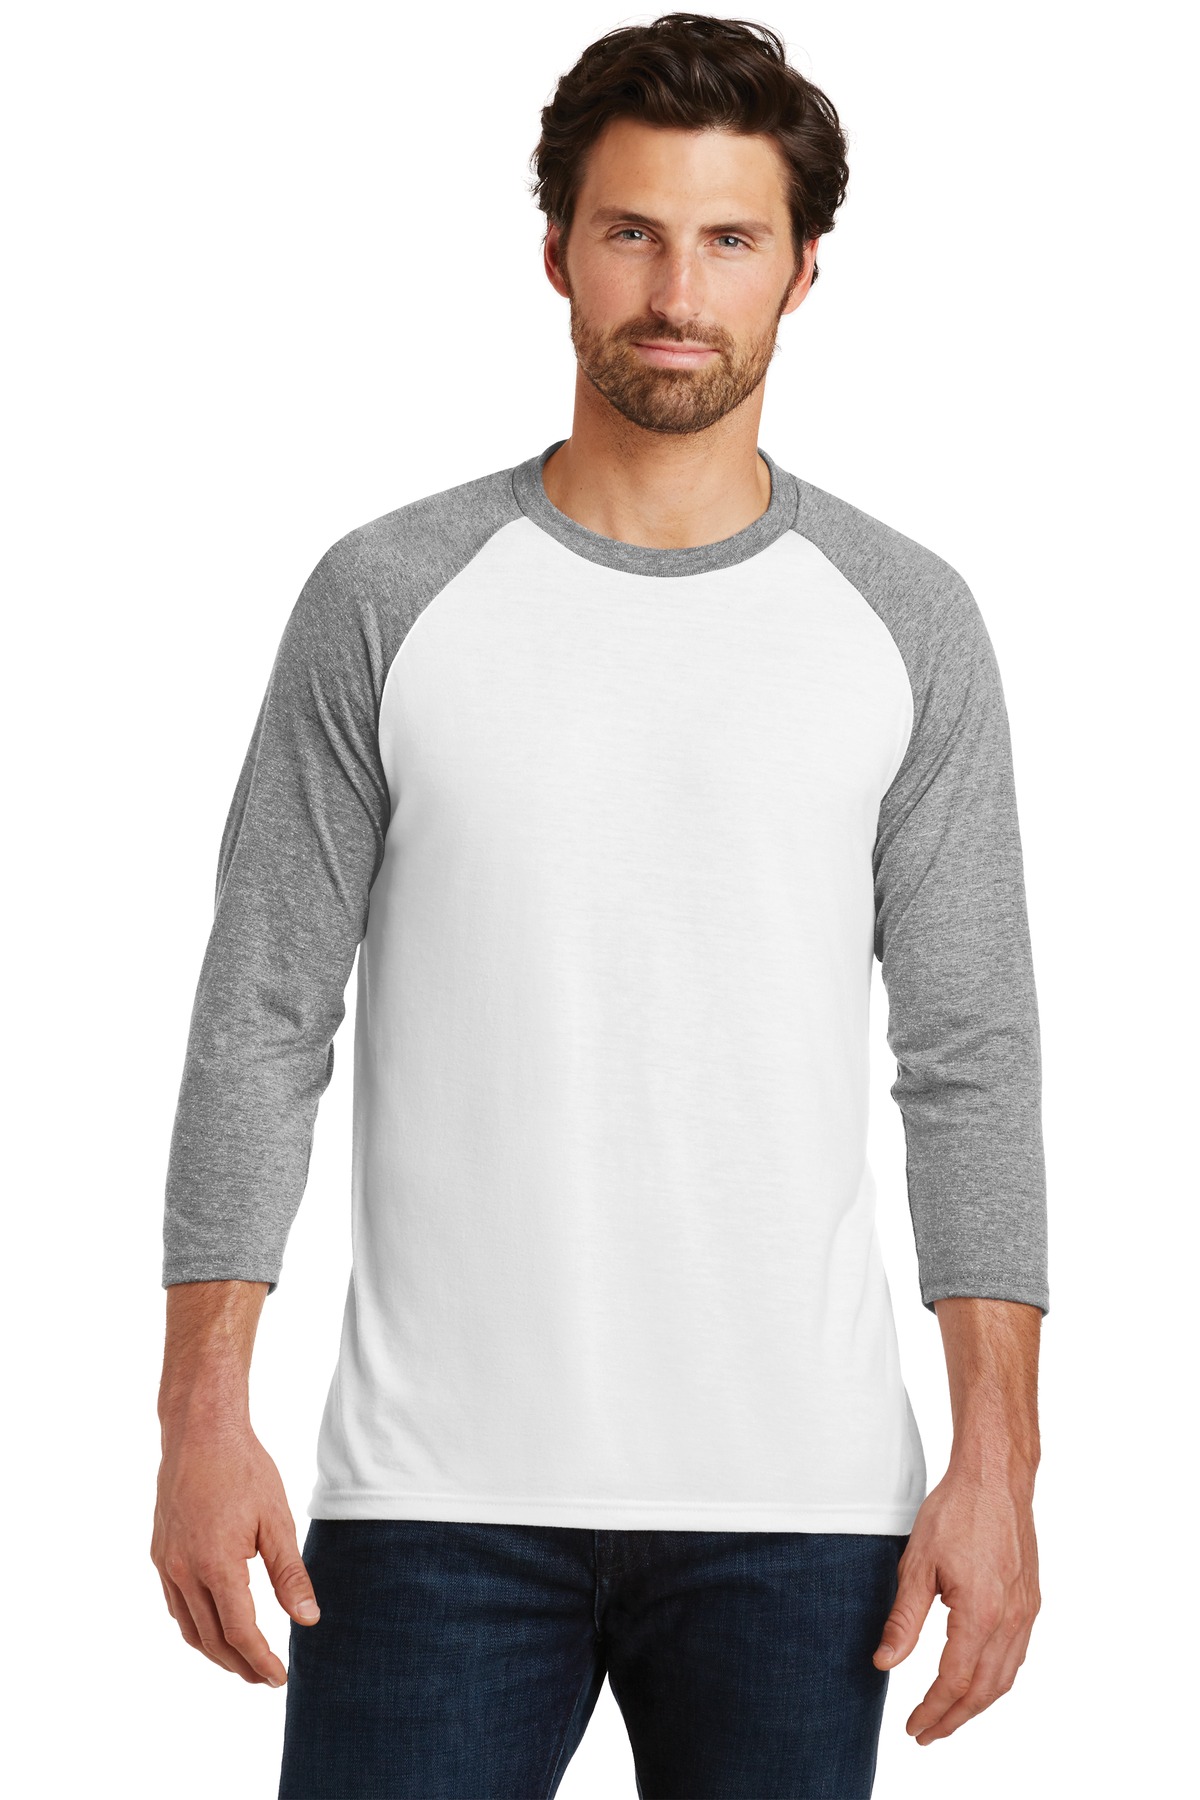 District Hospitality T-Shirts ® Perfect Tri® 3/4-Sleeve Raglan.-District